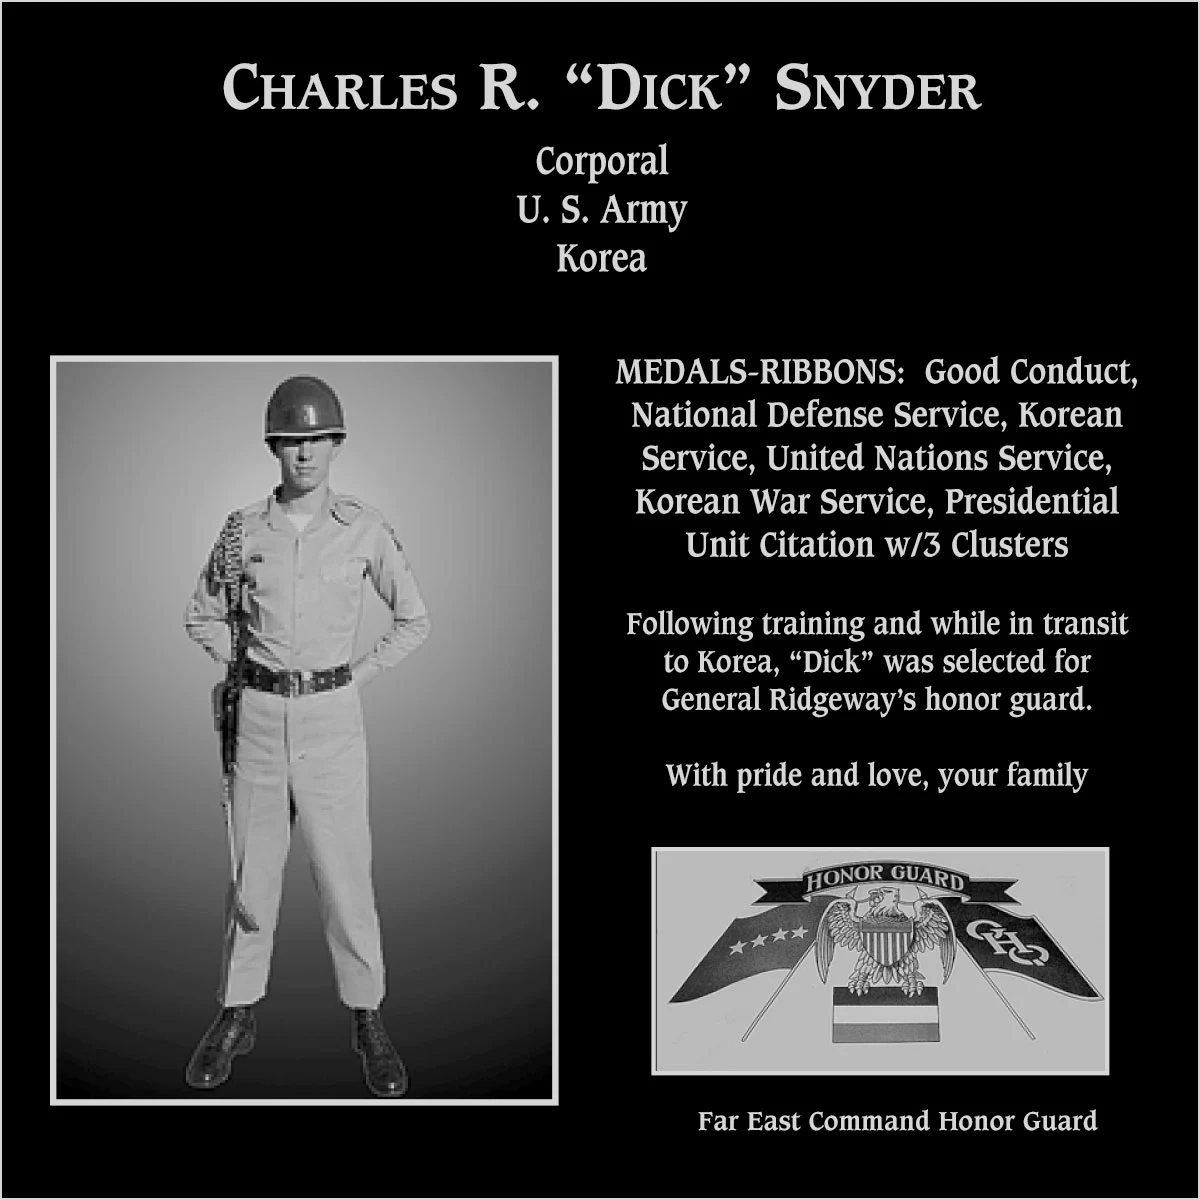 Charles R. “Dick” Snyder